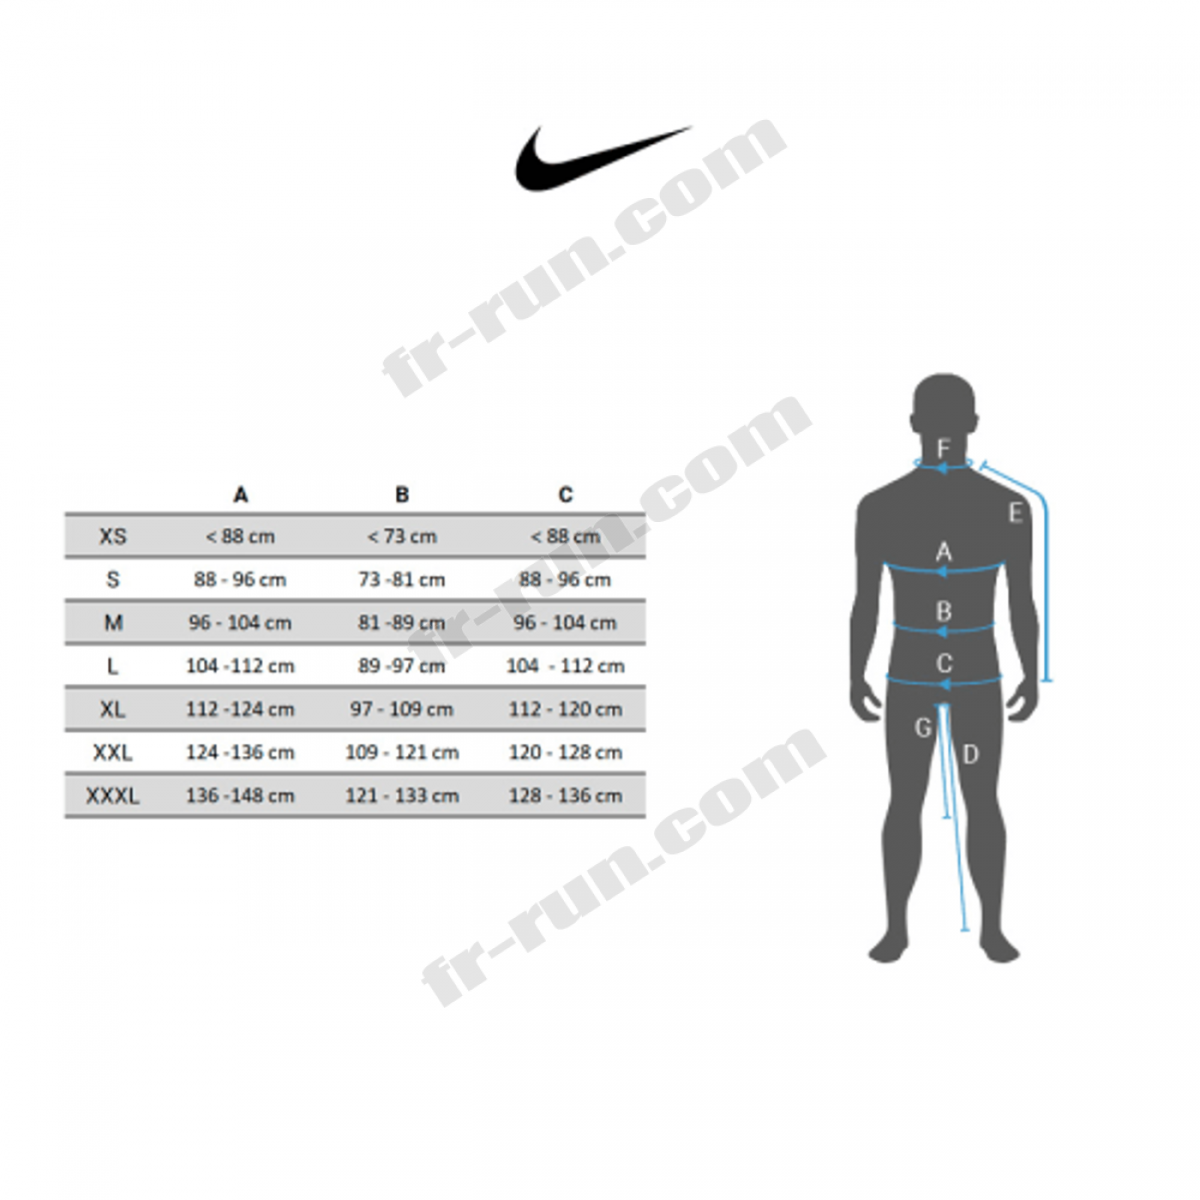 Nike/running homme NIKE Dri-fit miler running h ◇◇◇ Pas Cher Du Tout - -4